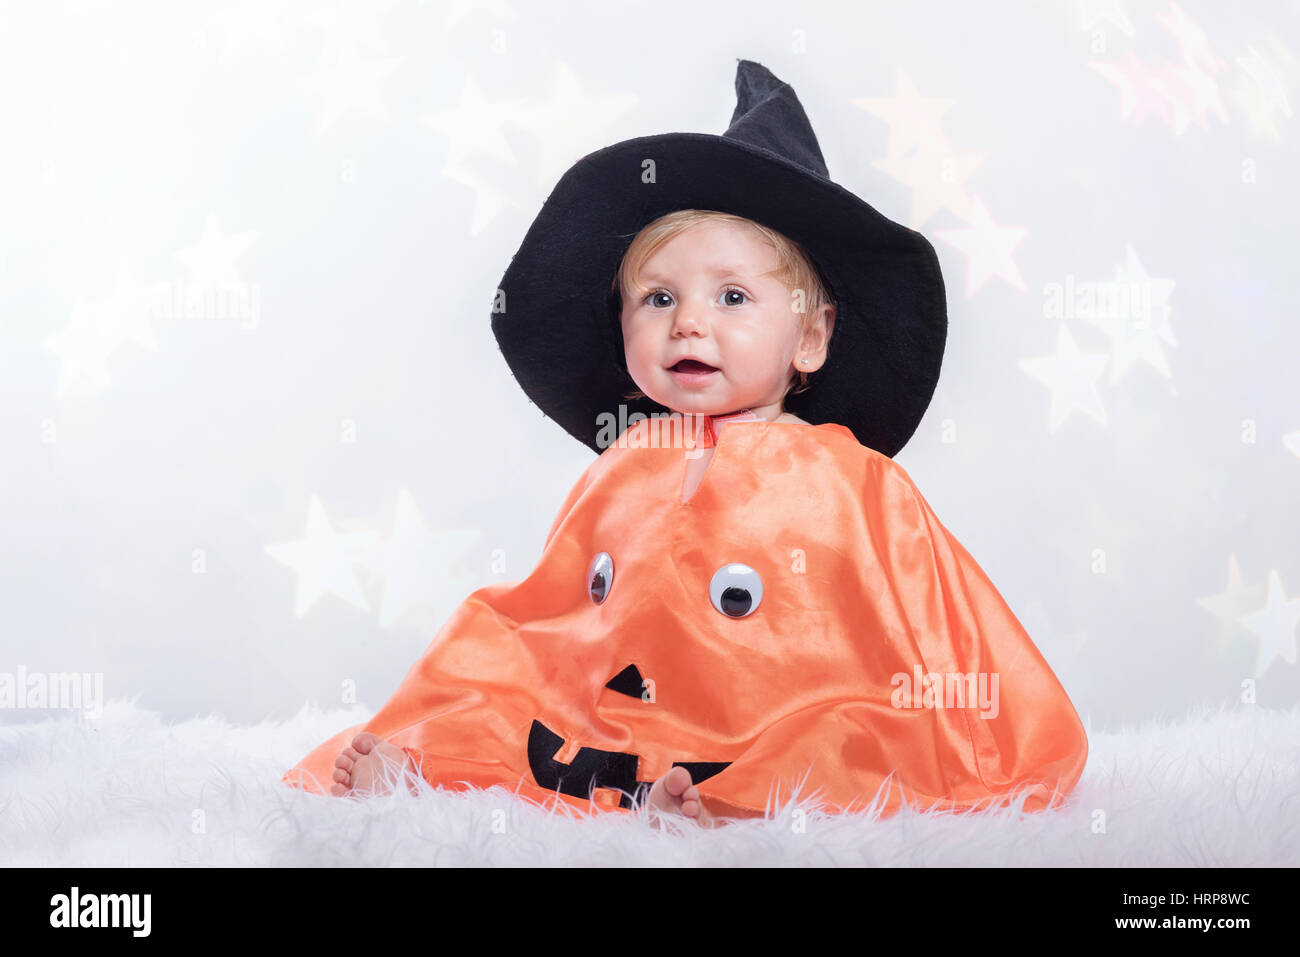 Happy halloween. Baby dissimulata in halloween Foto Stock